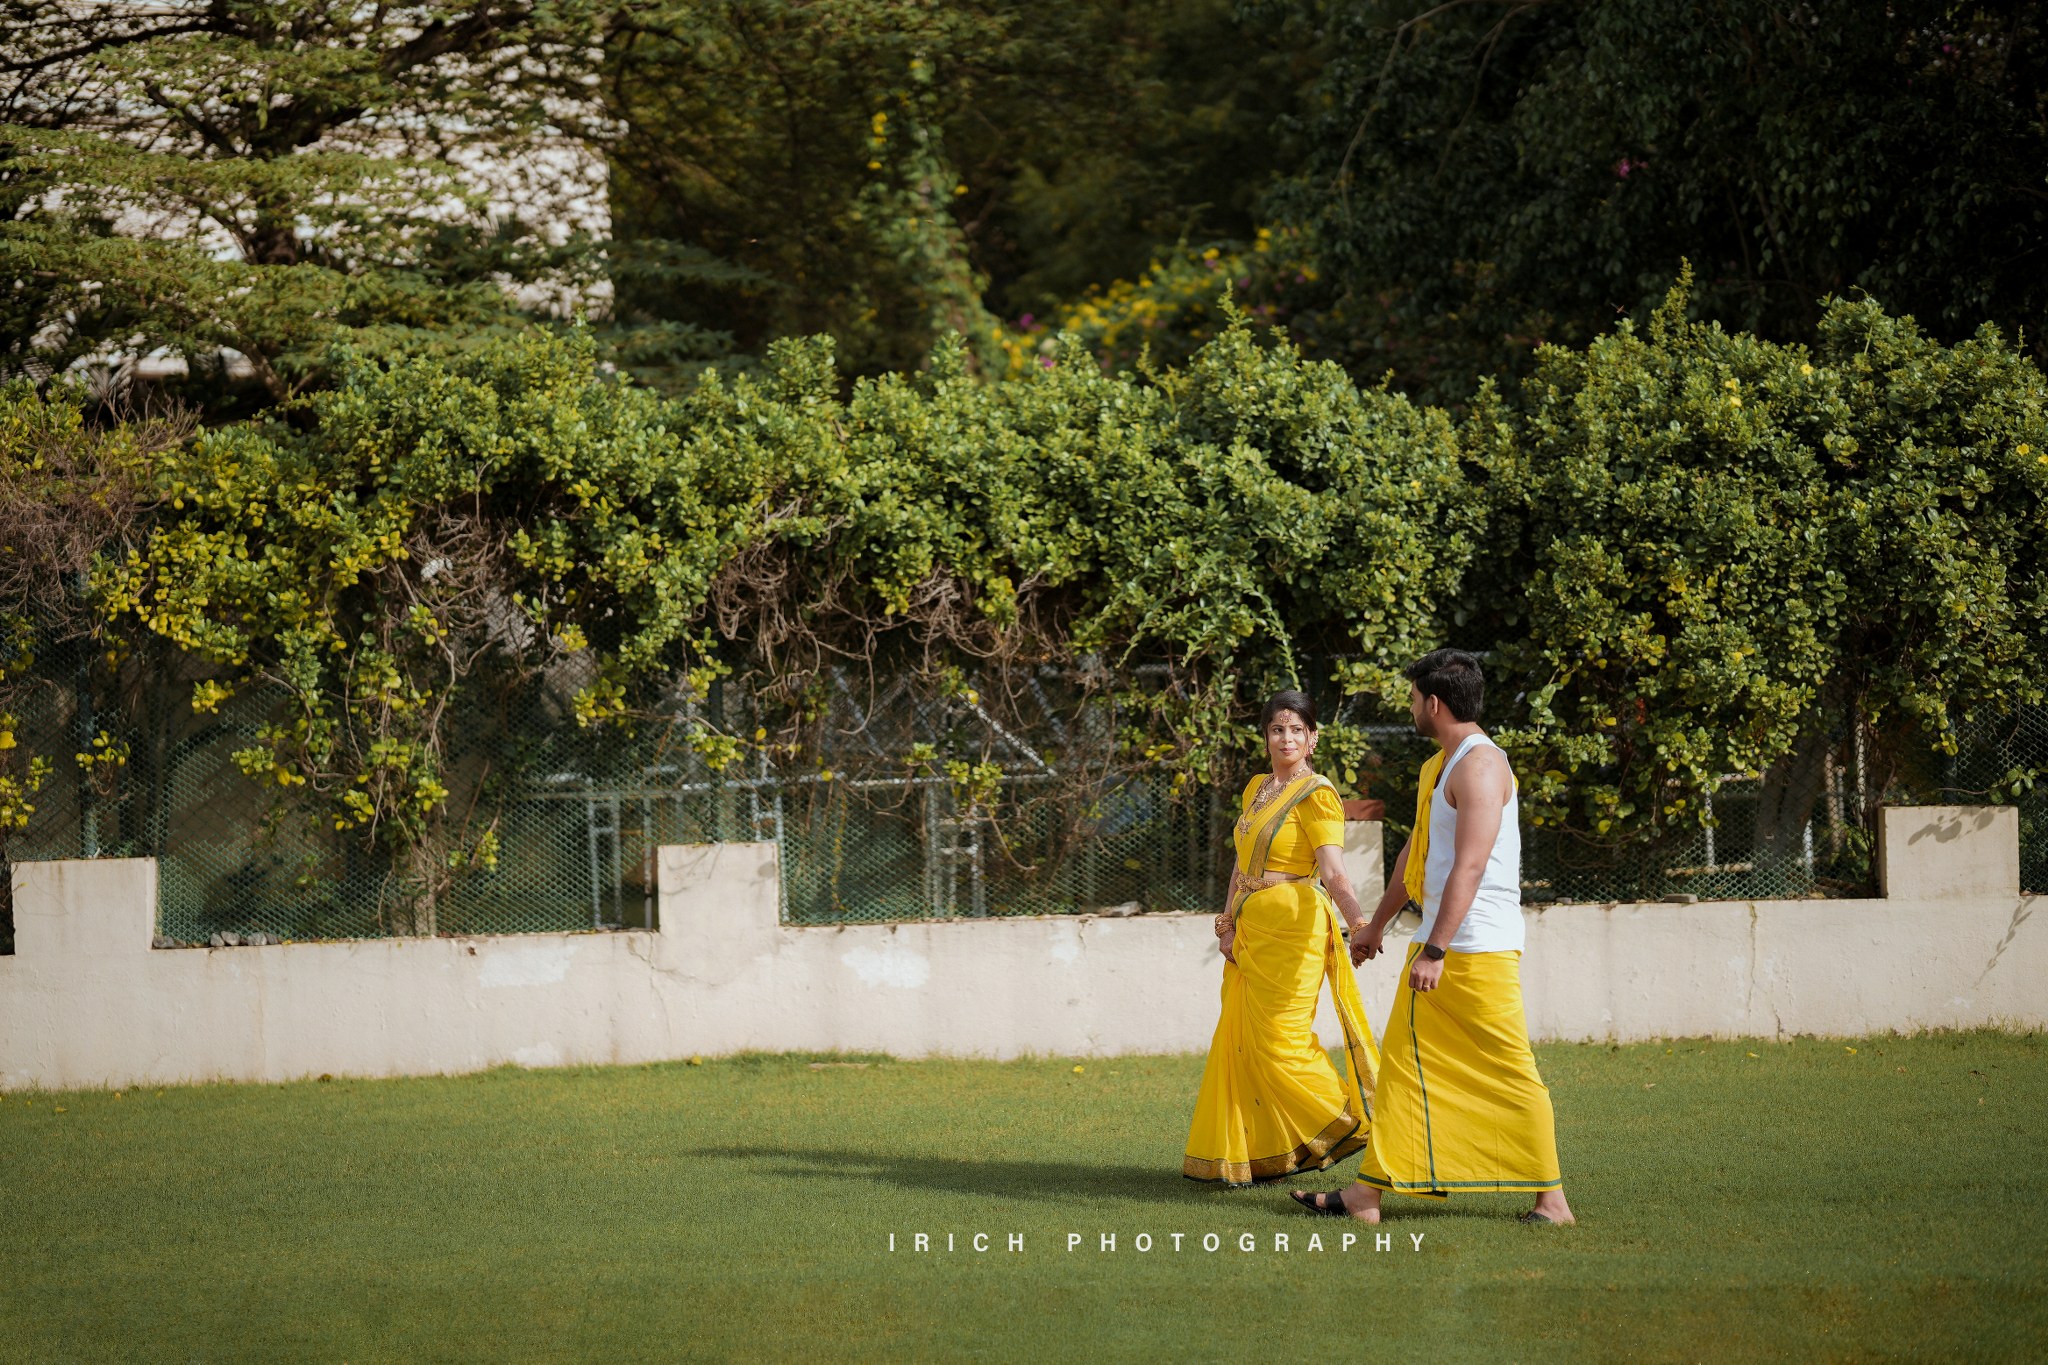 Tamil Wedding Couple Photography